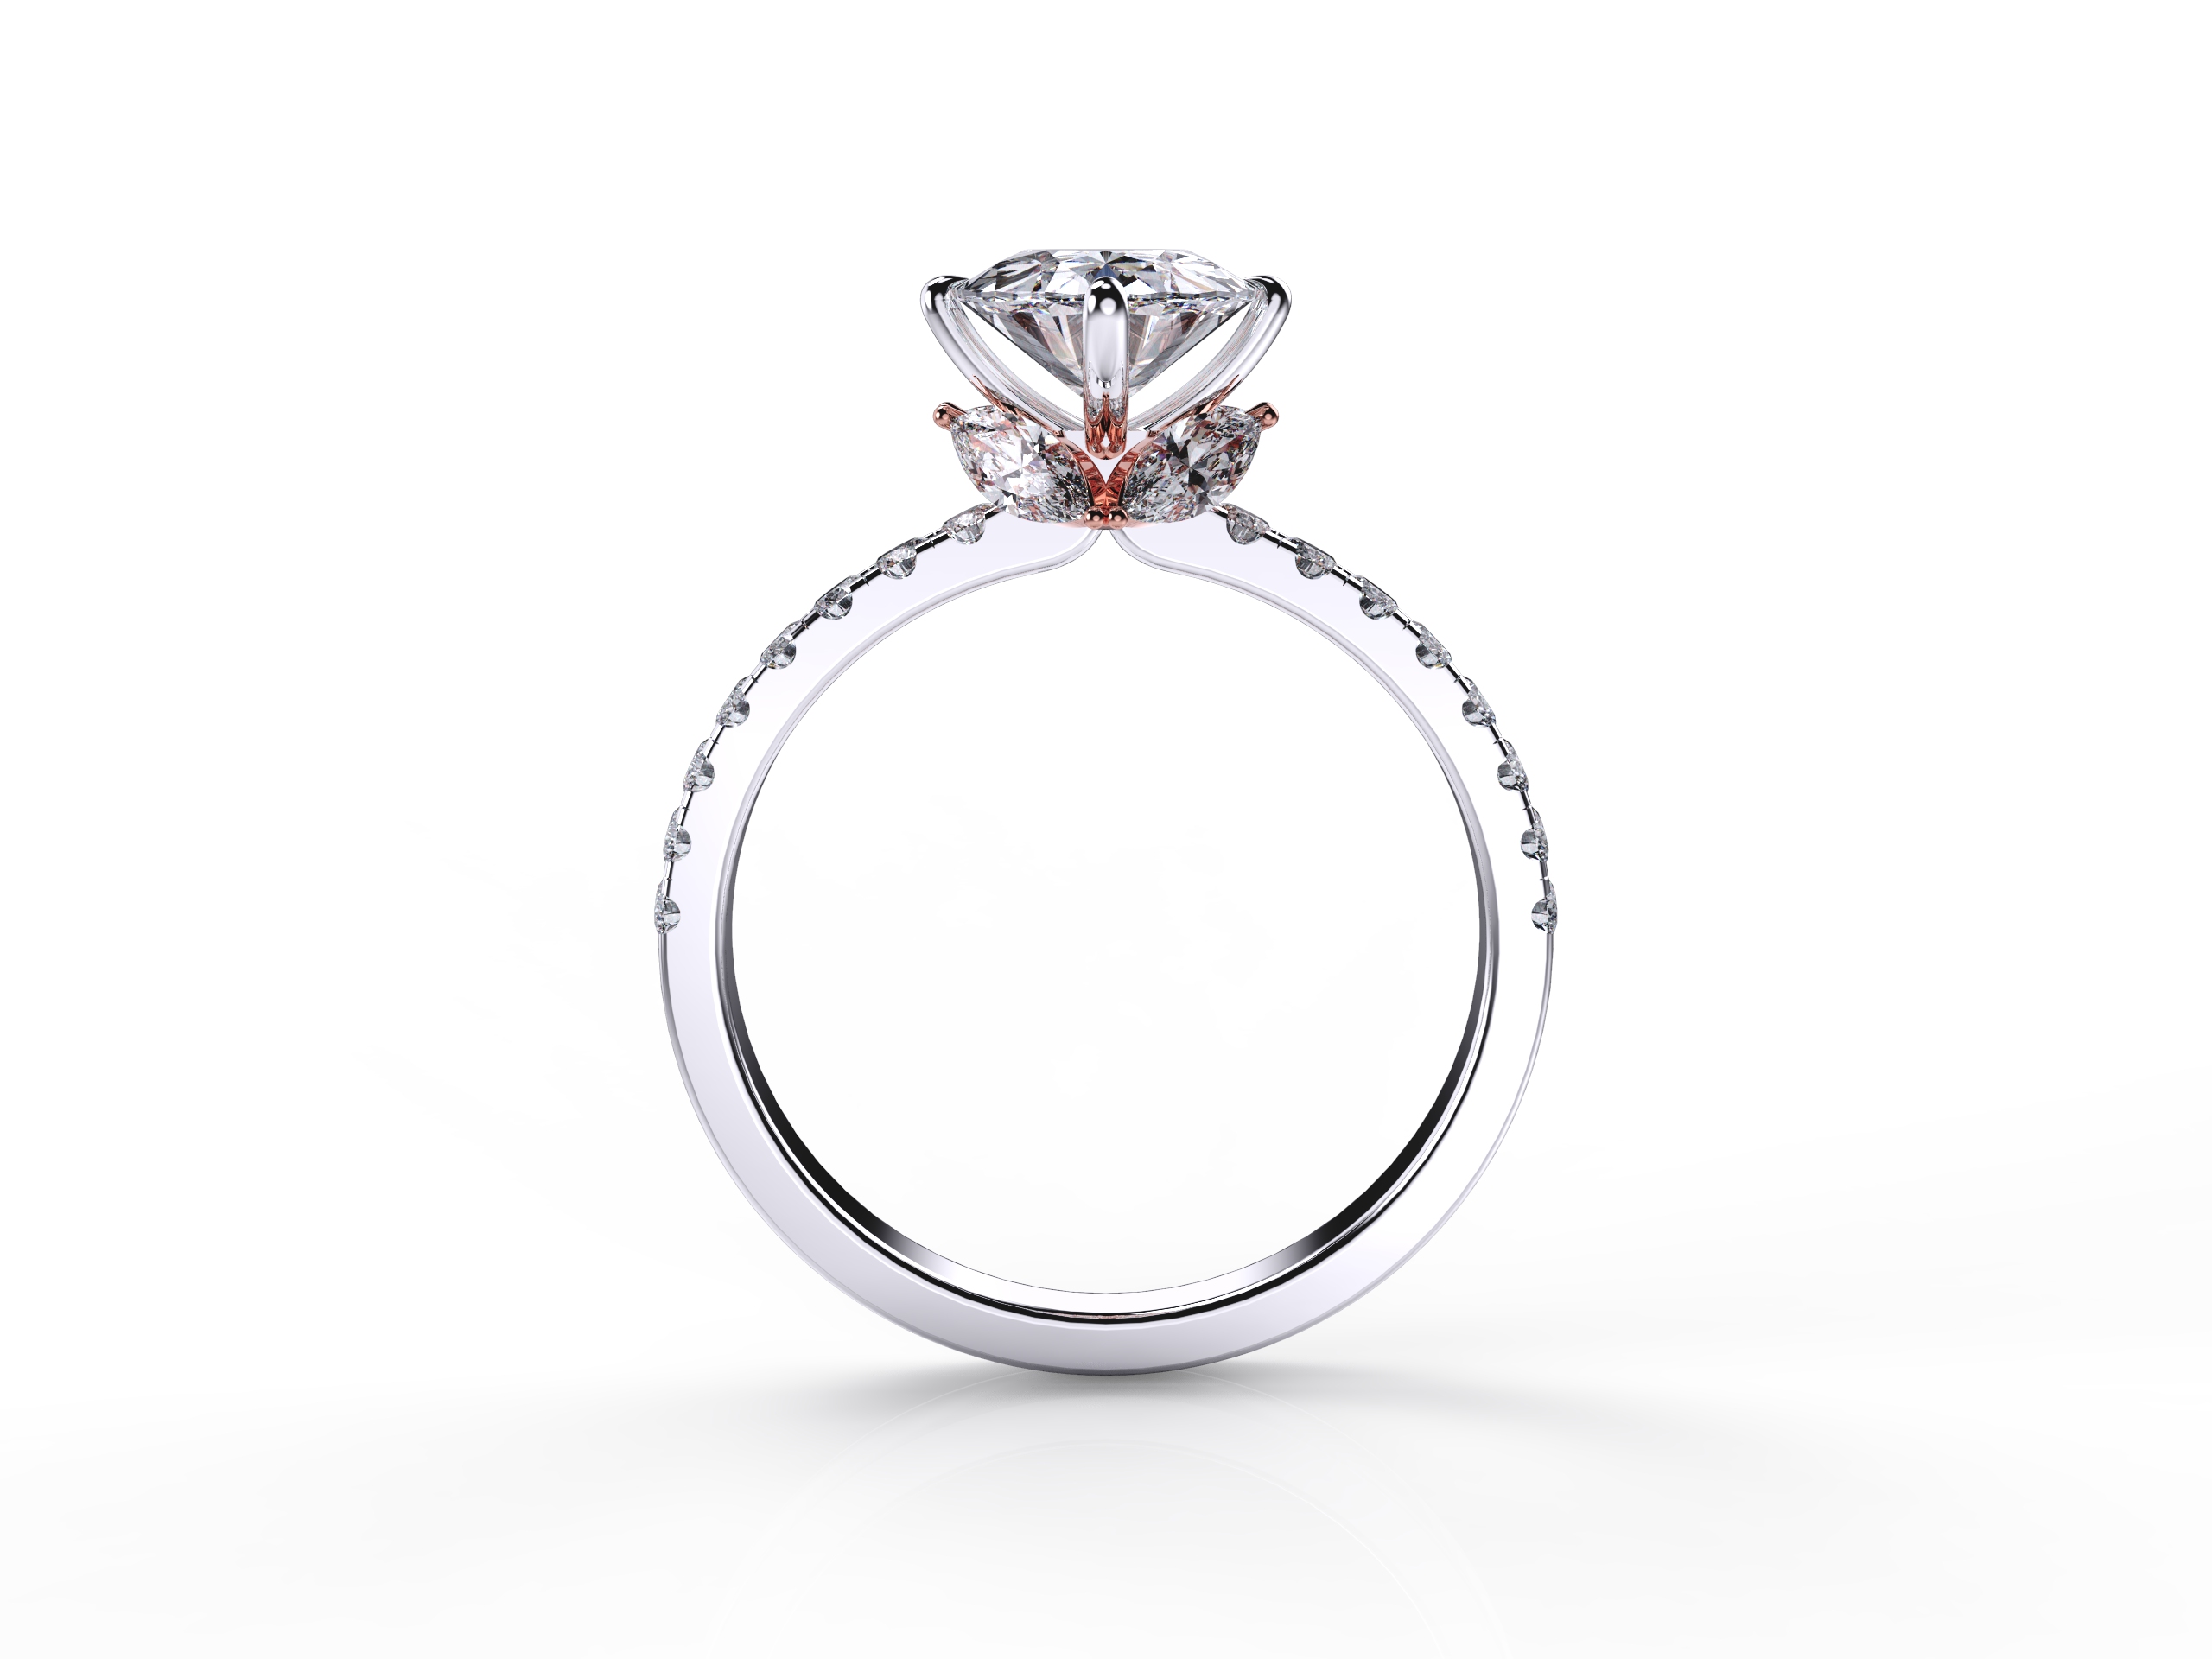 Enchanted Pave Oval Diamond Ring